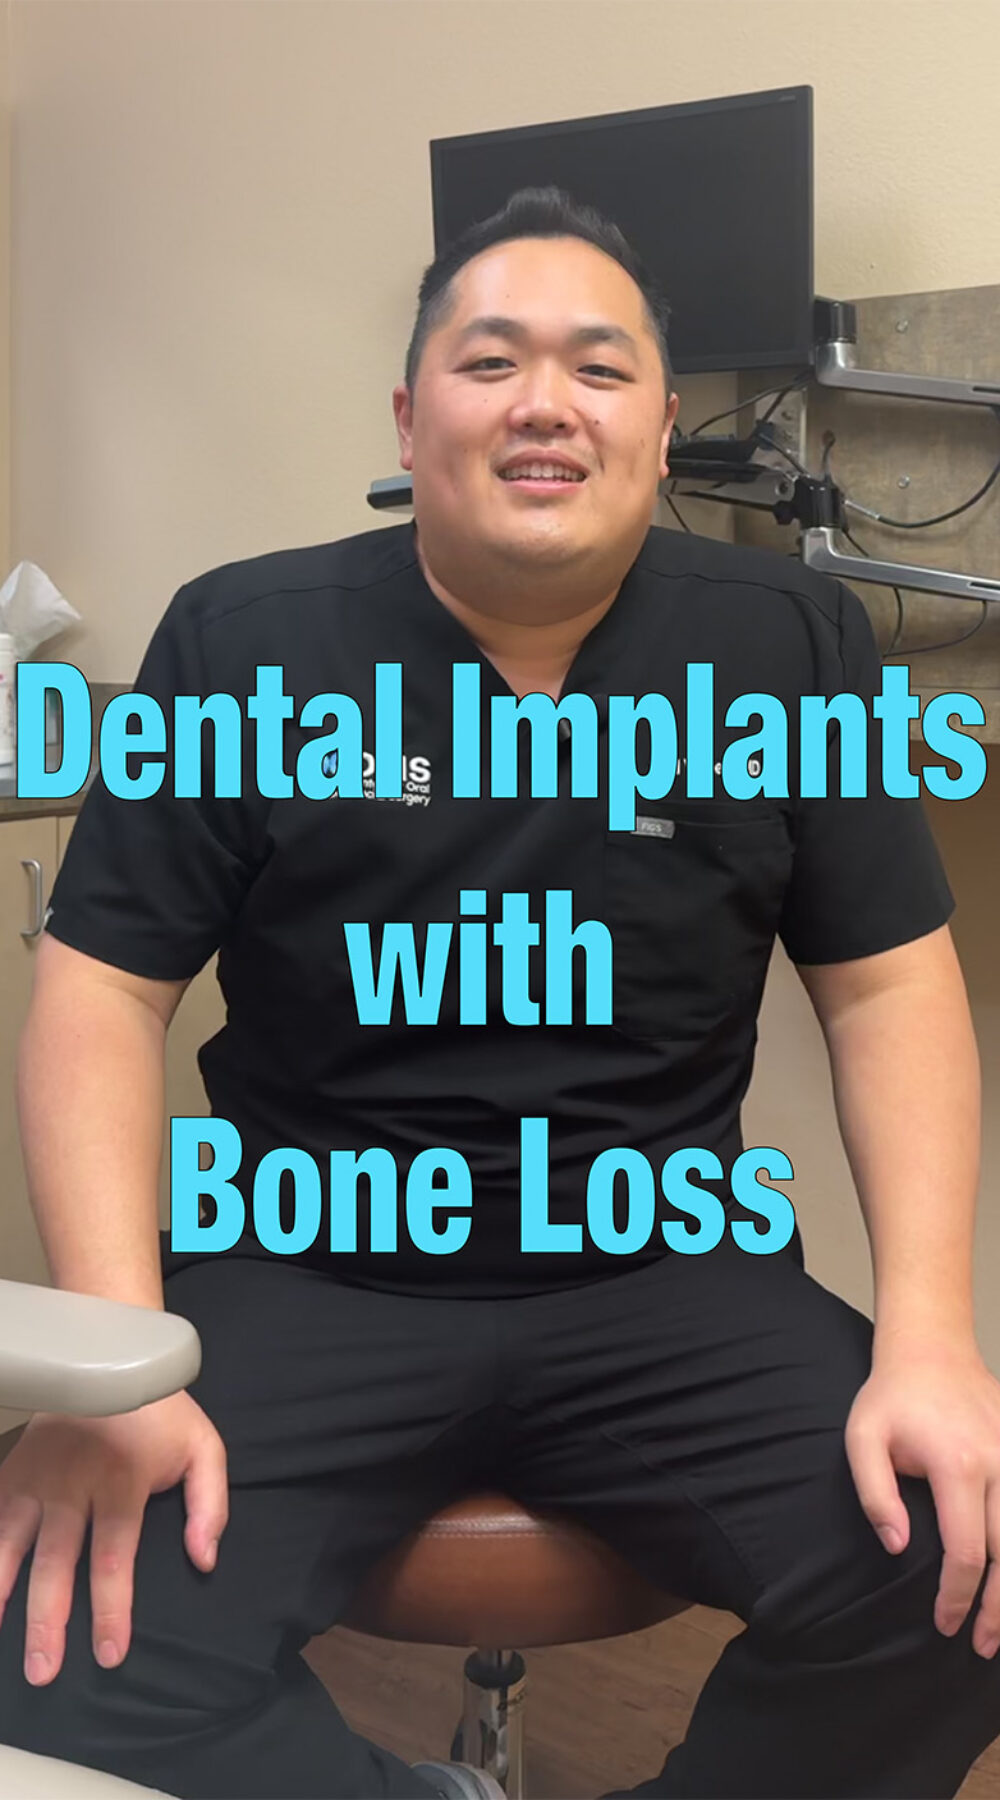 Dental Implants with Bone Loss Cover Art copy